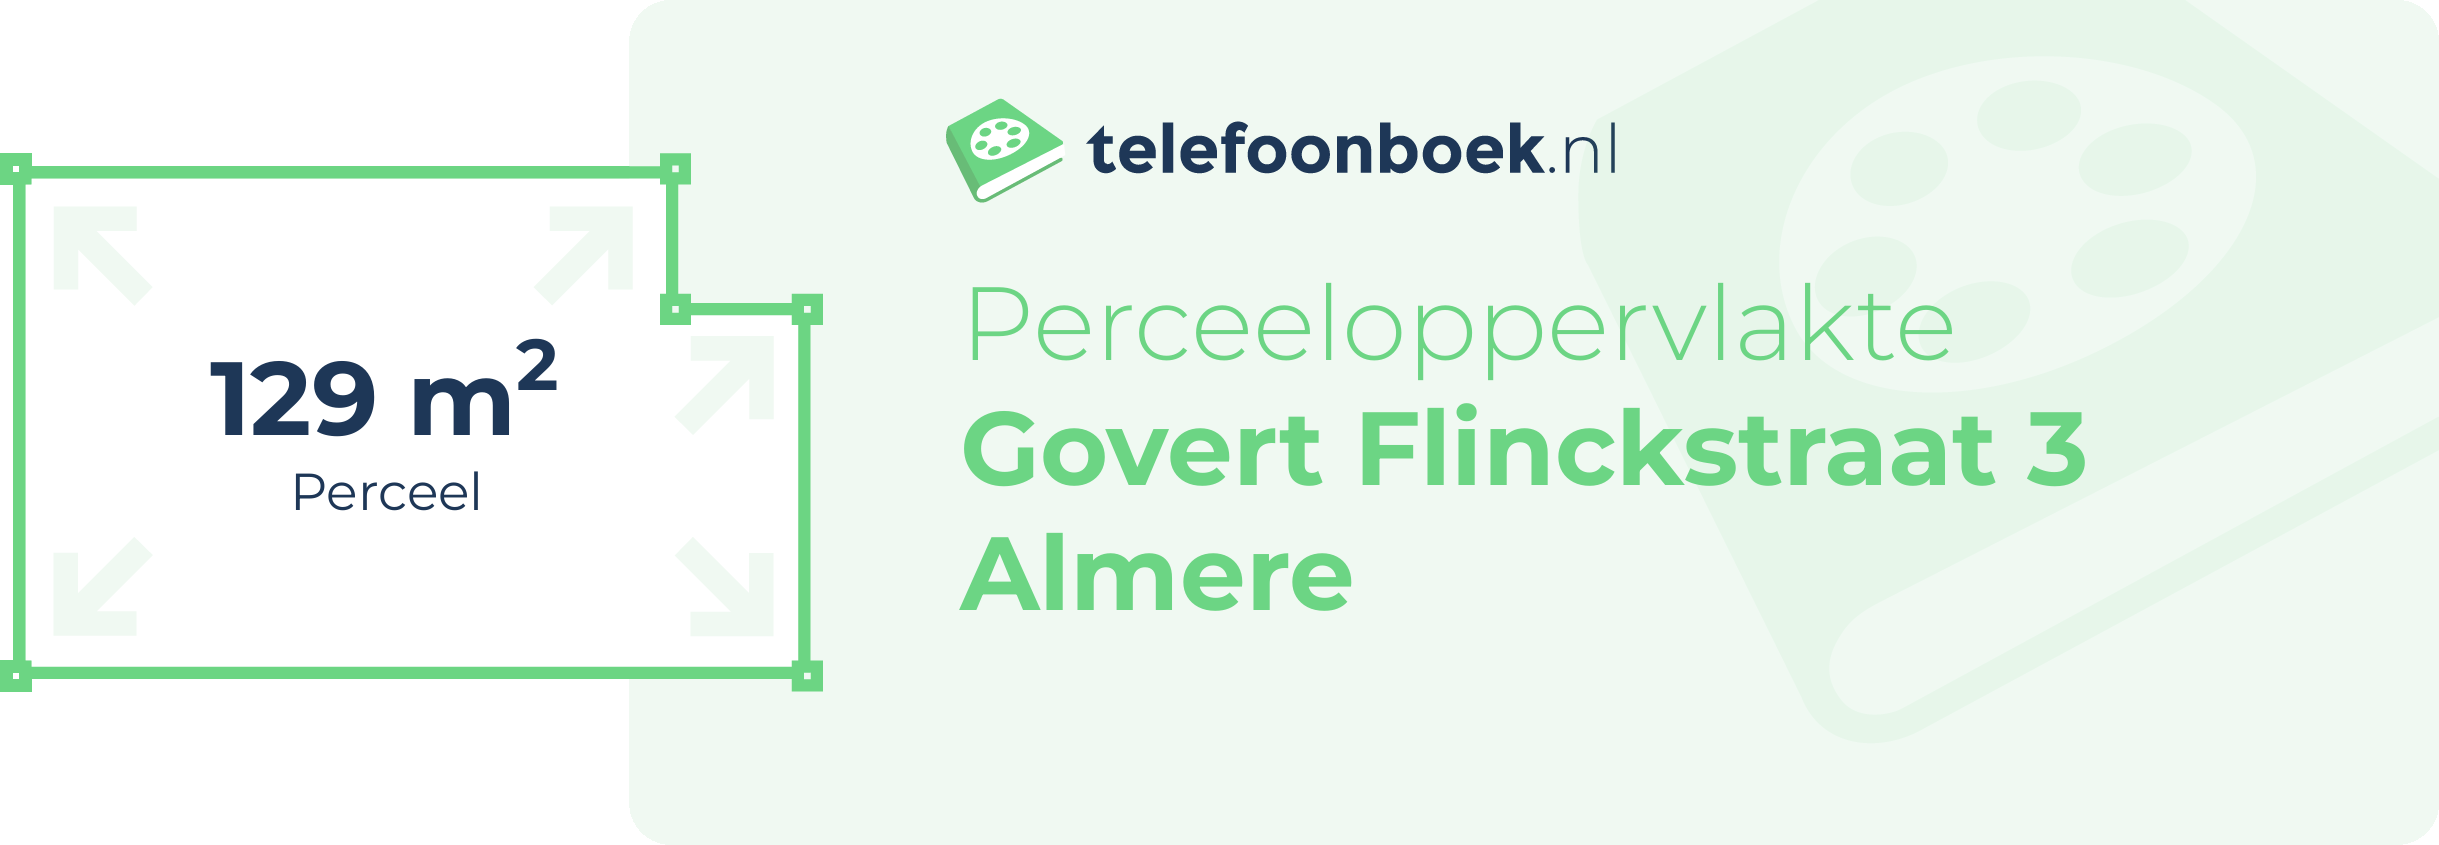 Perceeloppervlakte Govert Flinckstraat 3 Almere